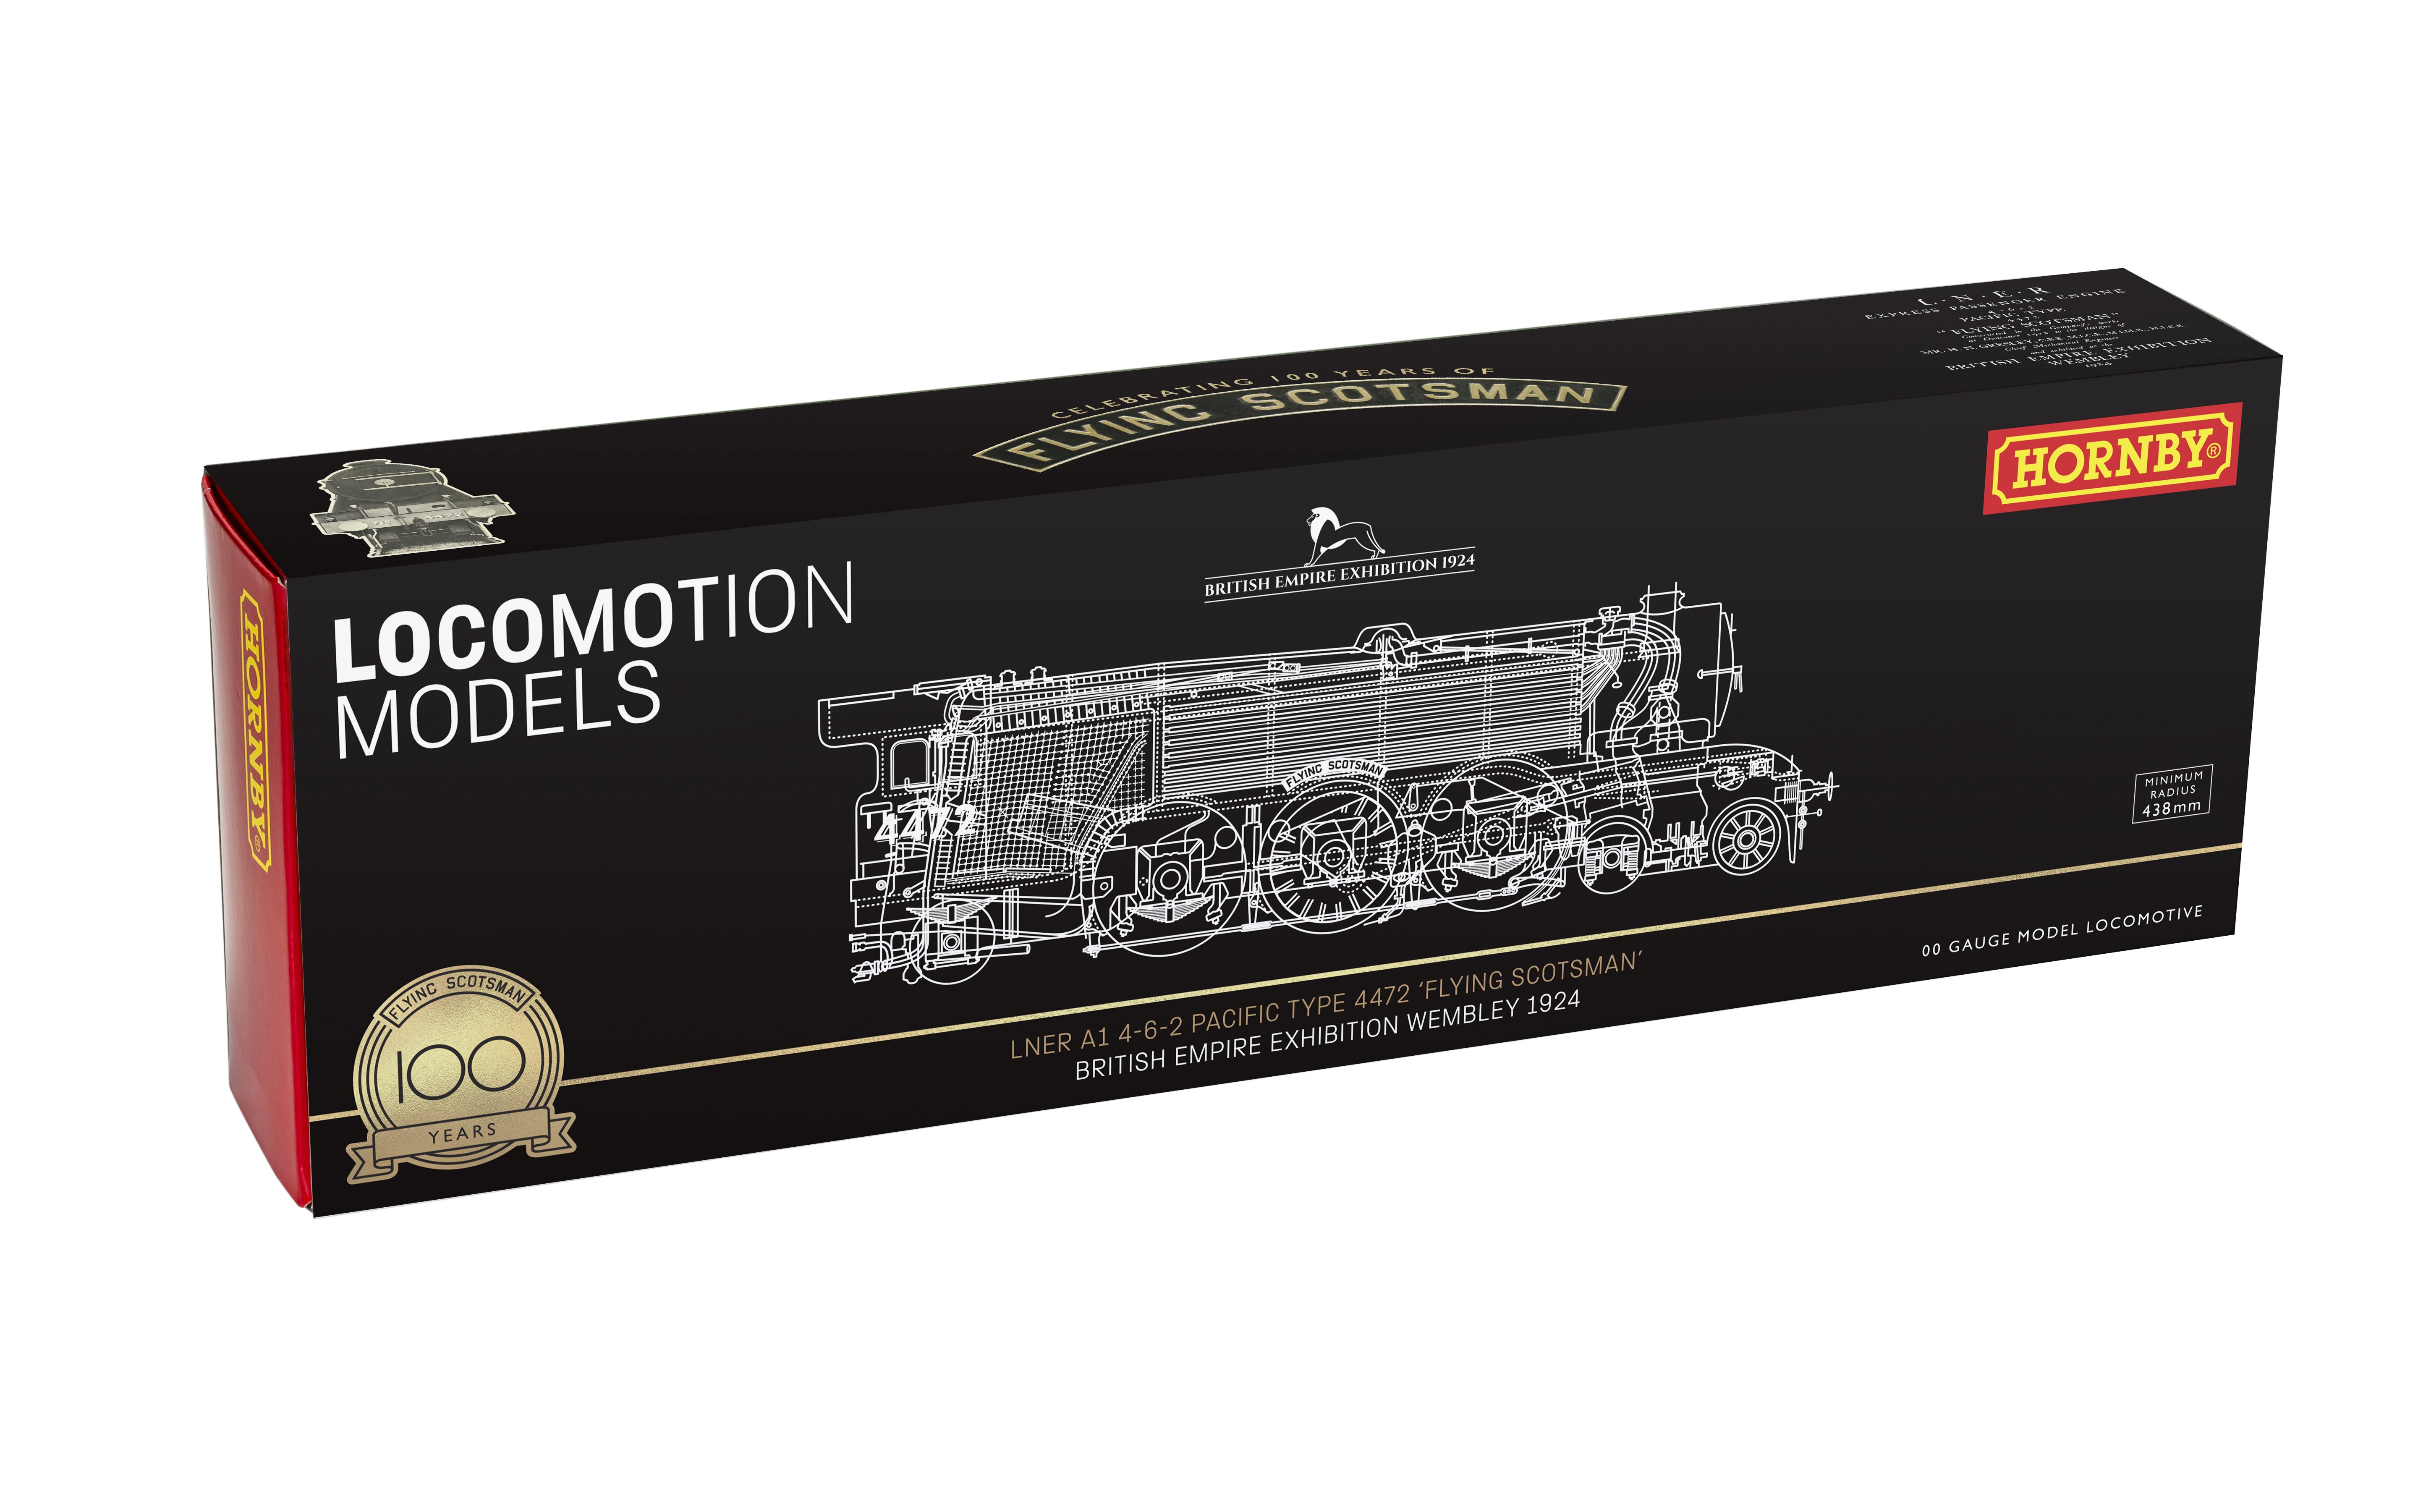 Locomotion Models Flying Scotsman Centenary models.